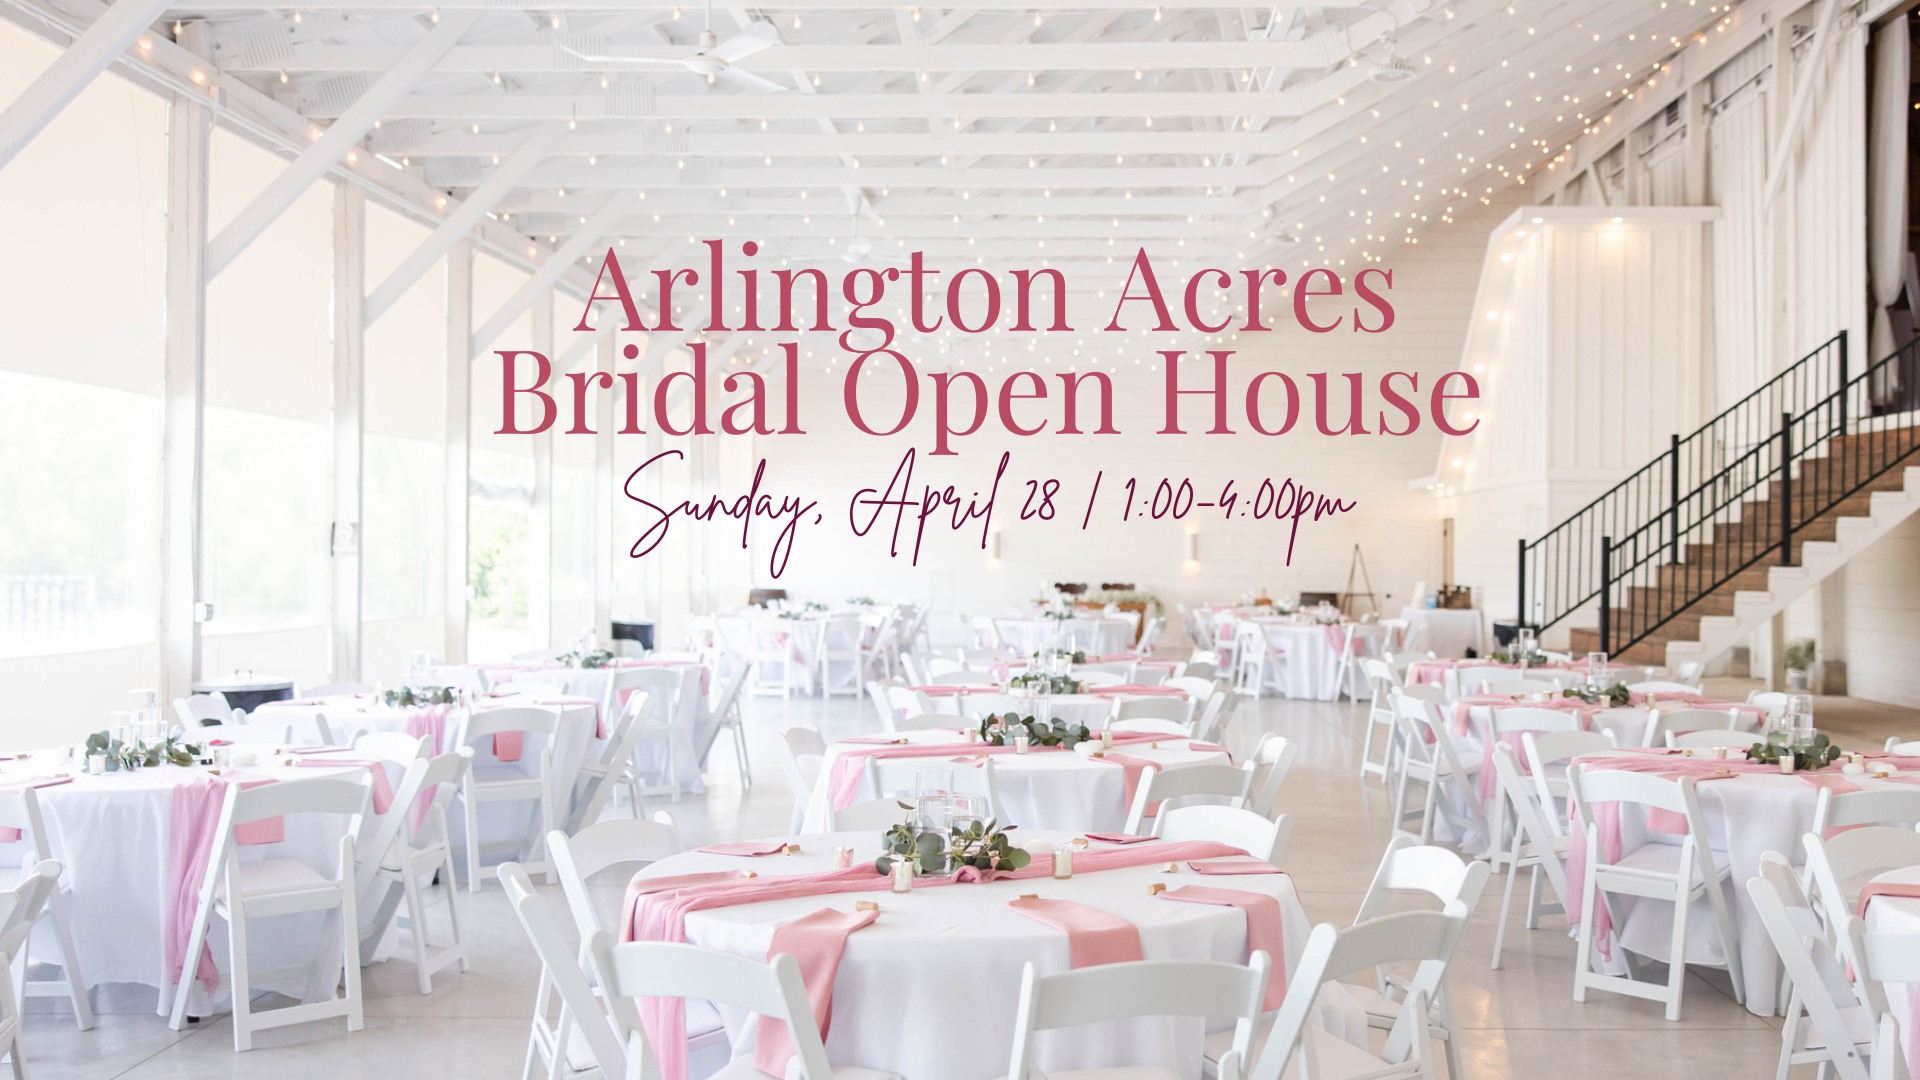 Arlington Acres Bridal Open House